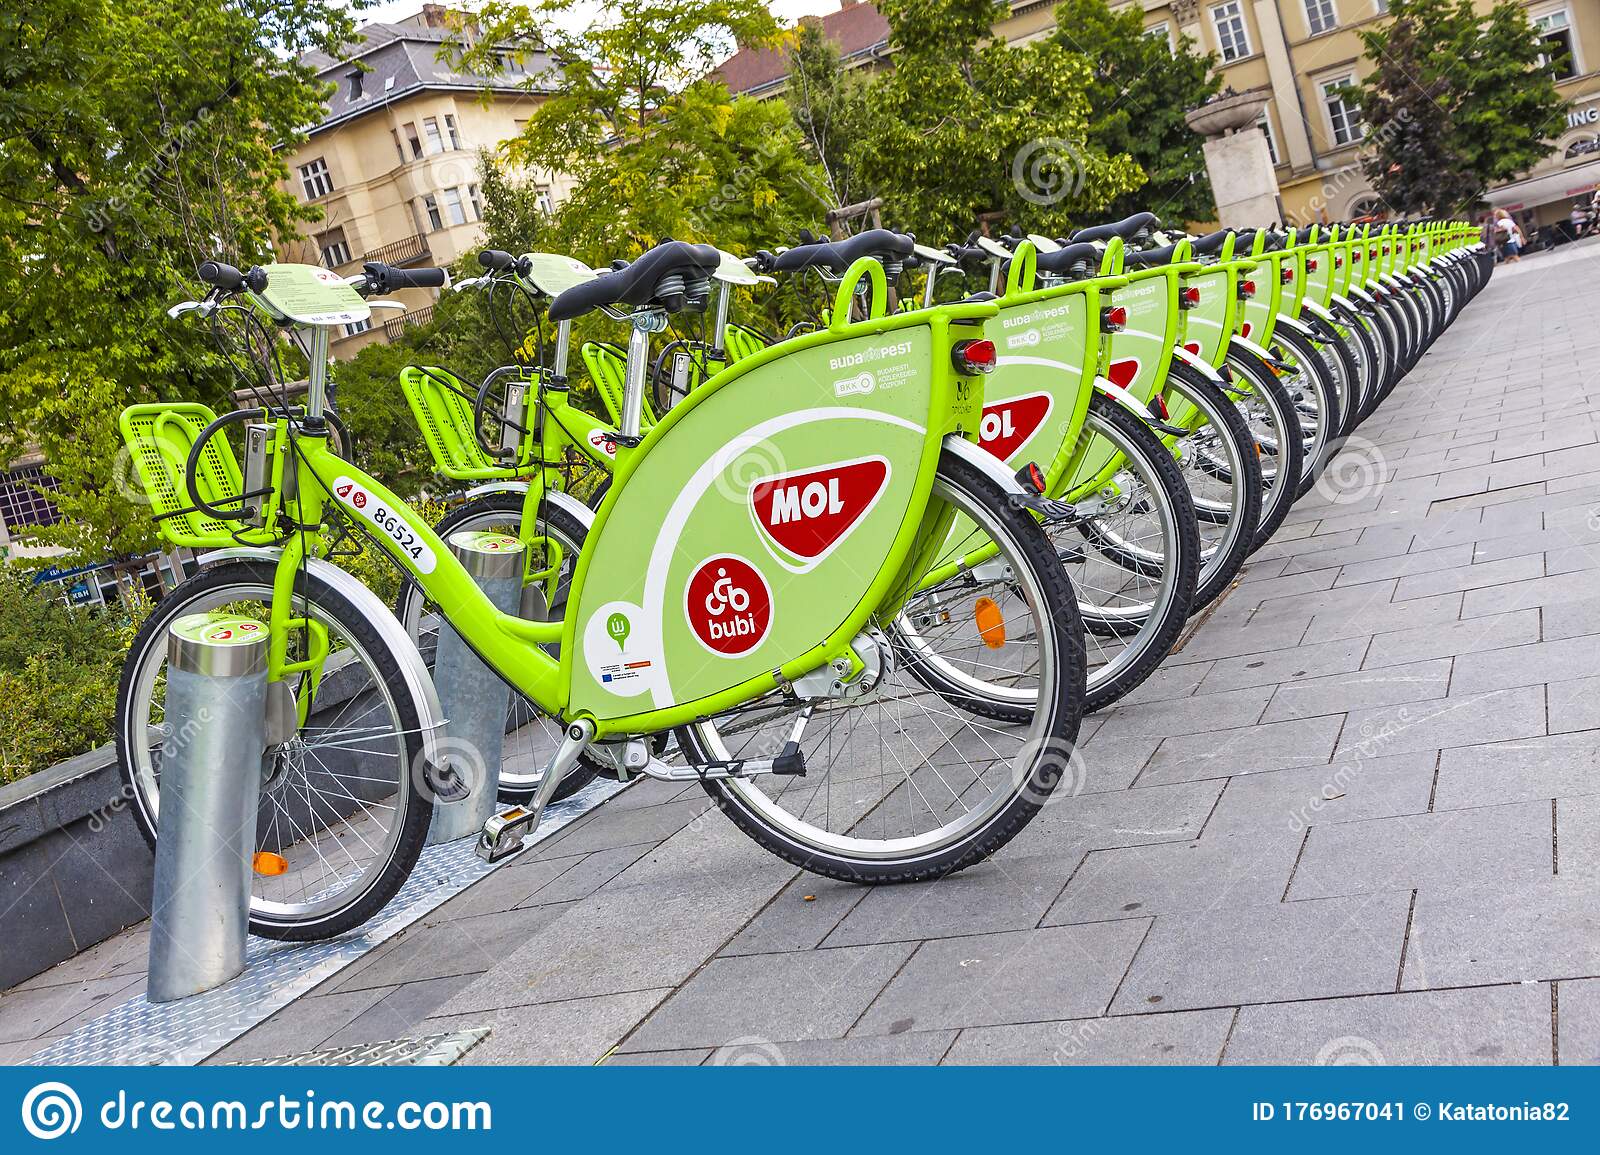 Bubi bikes - public bike system in Budapest